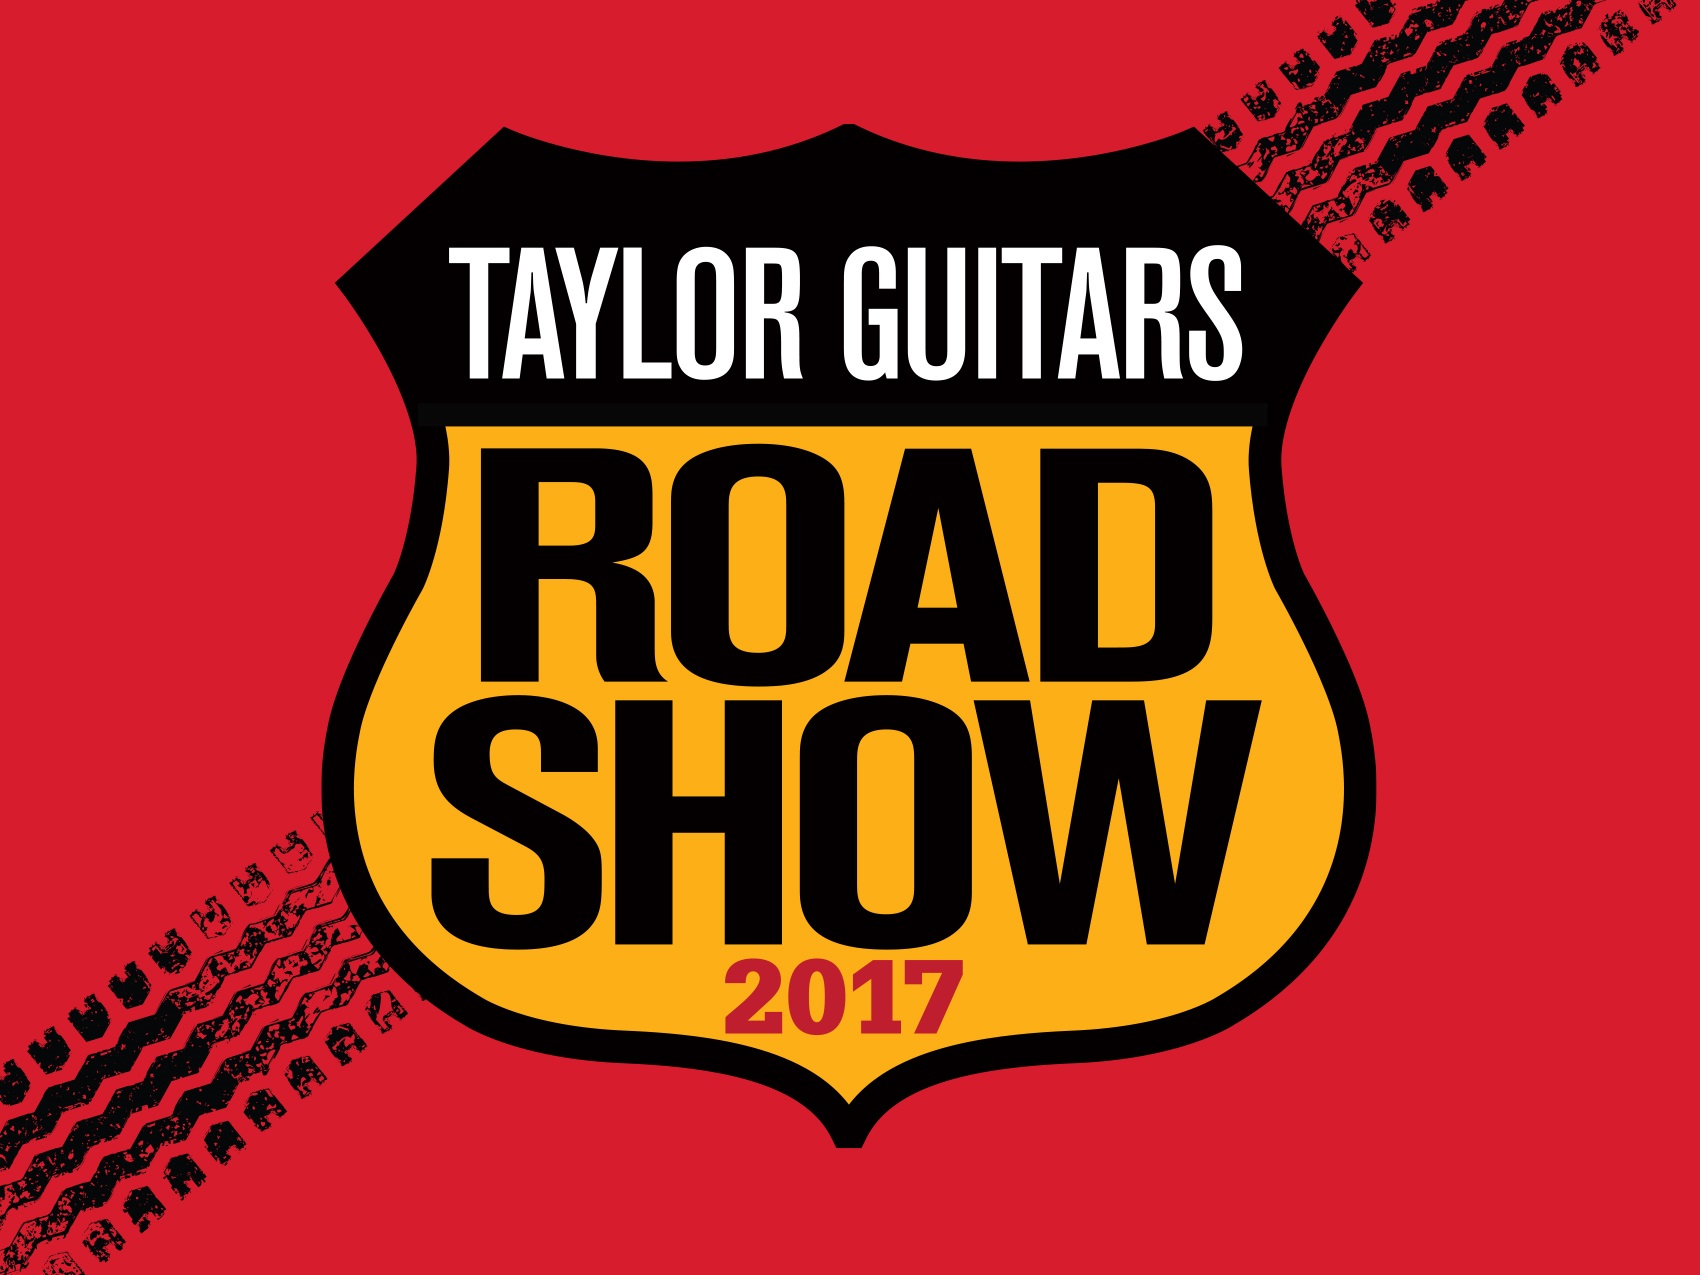 Taylor Guitar Road Show 2017